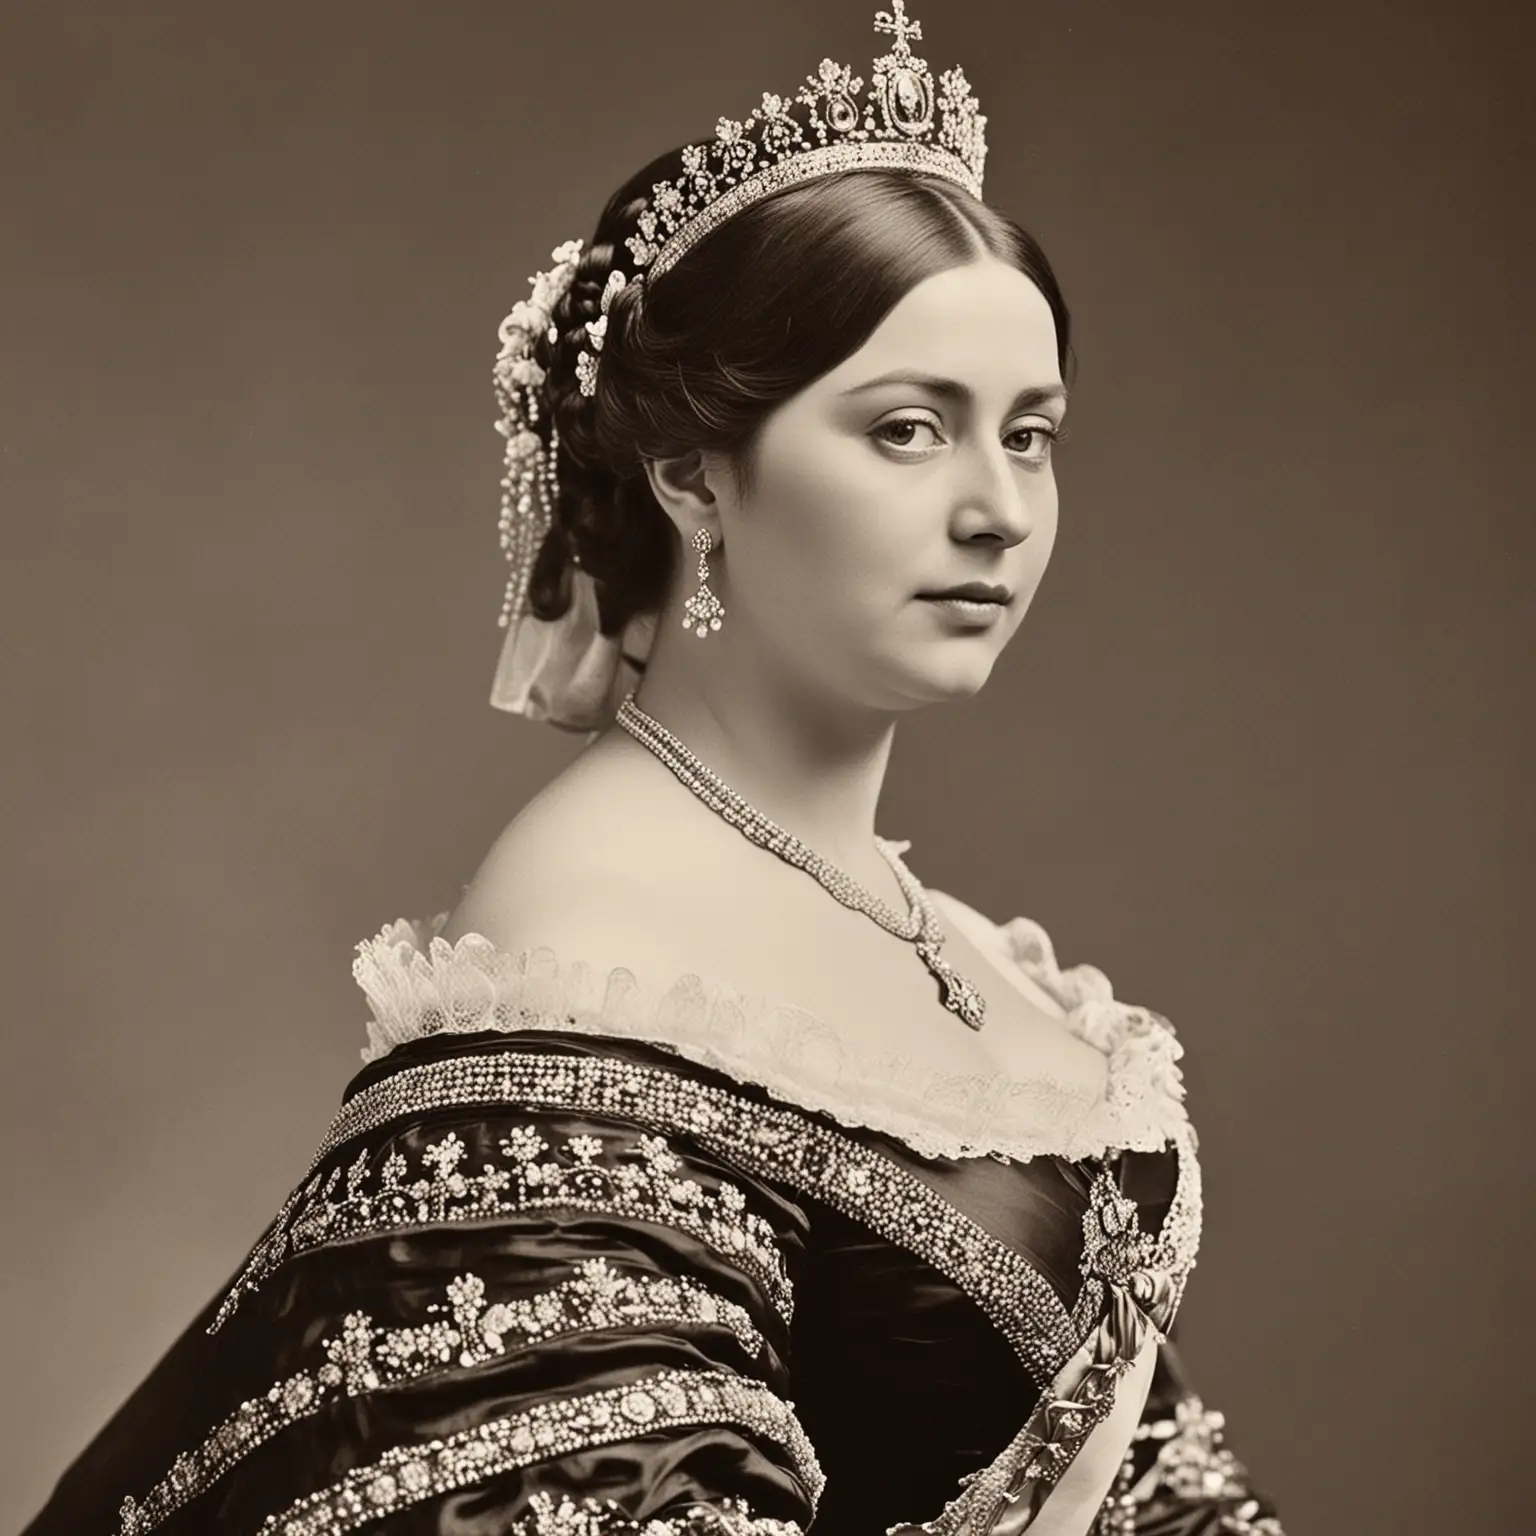 Historical Portrait of Queen Victoria in Royal Attire